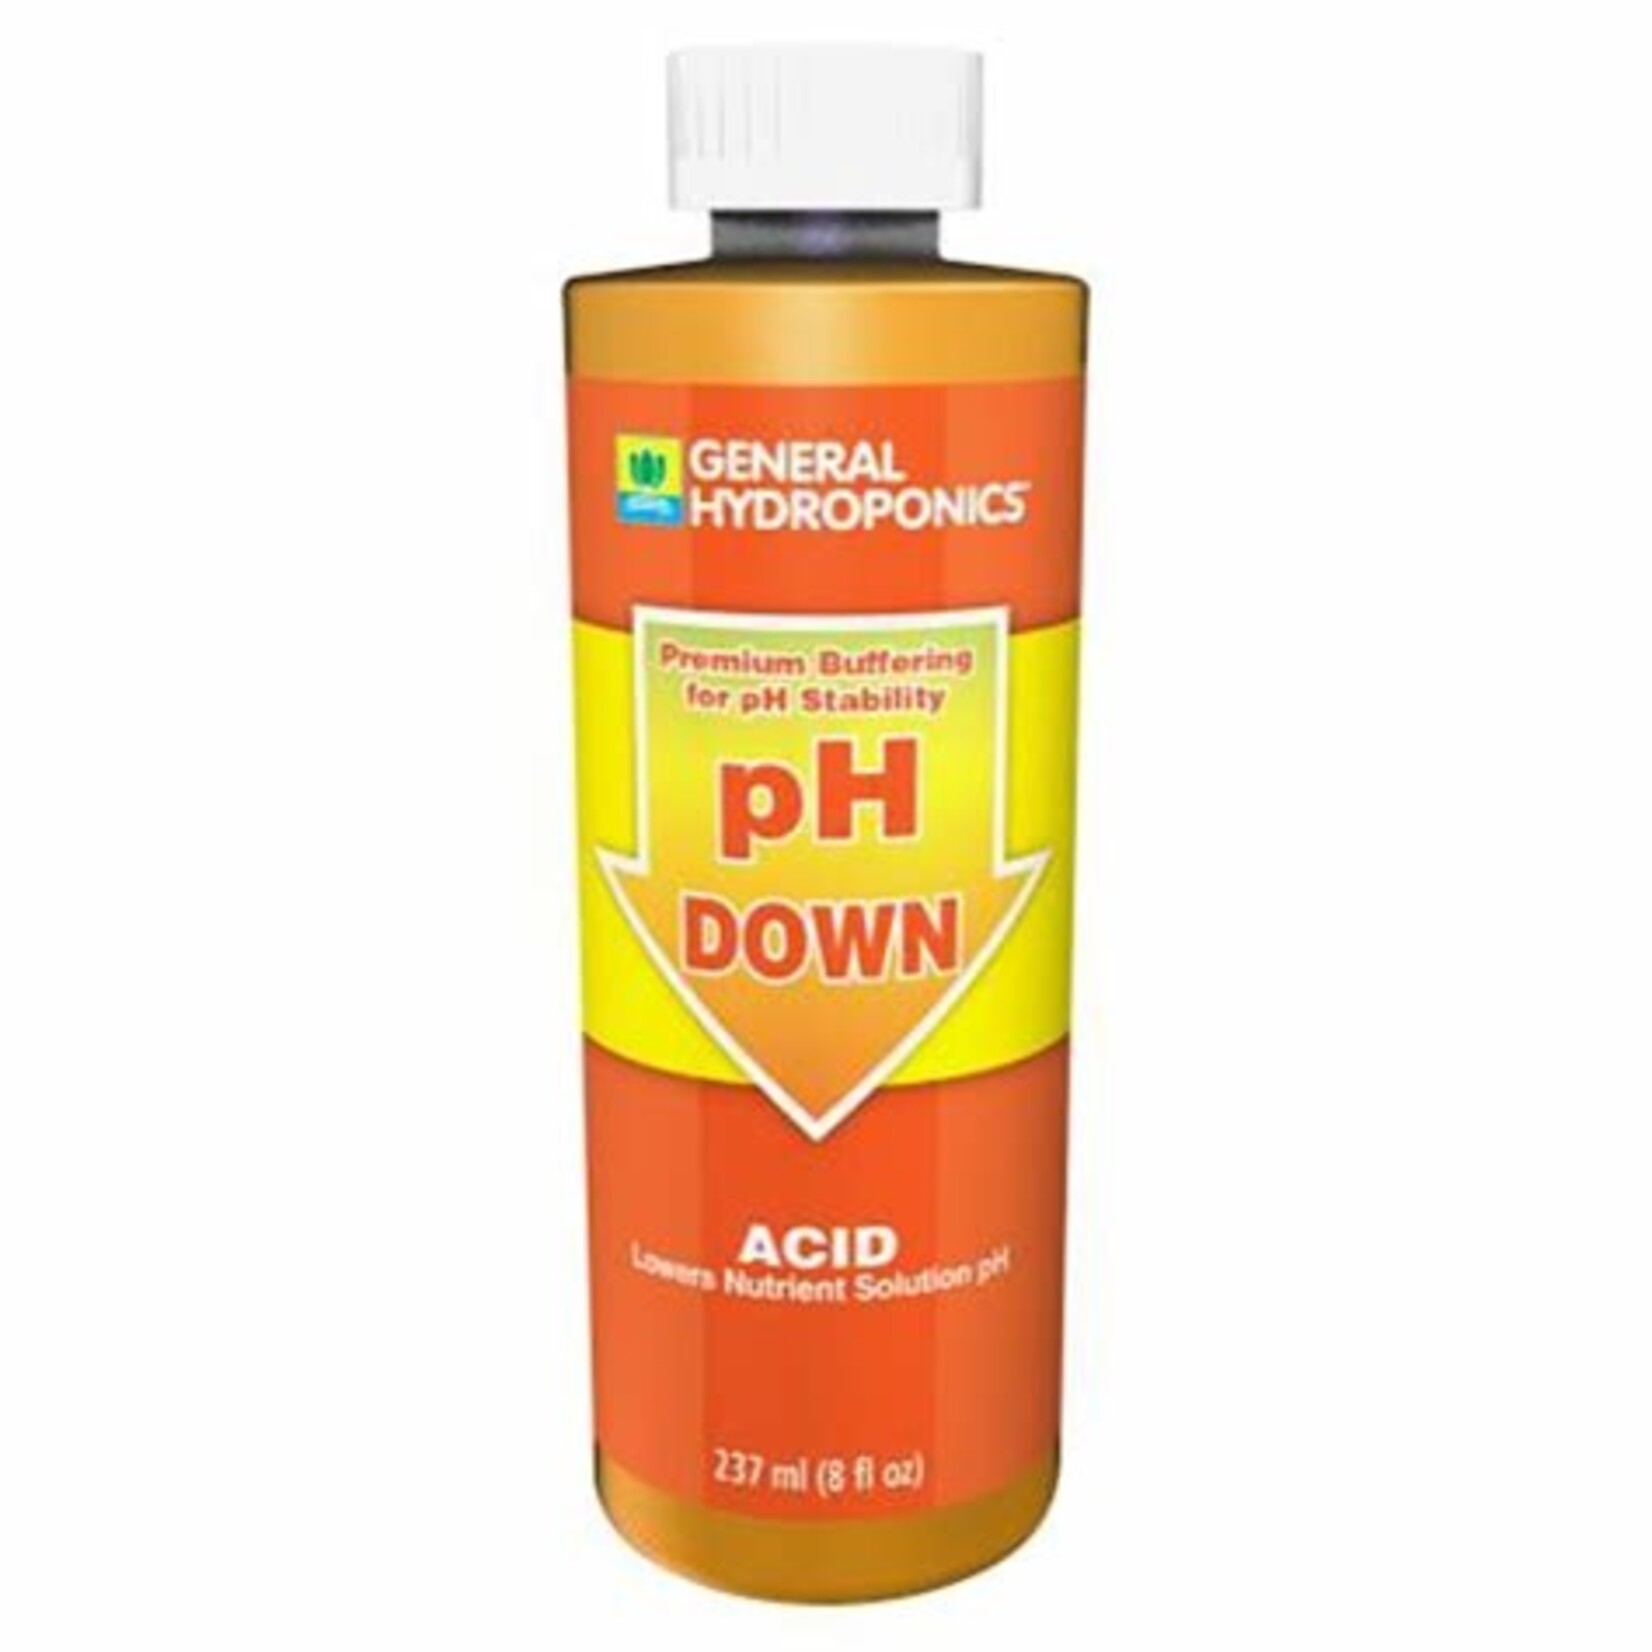 General Hydroponics General Hydroponics pH Down 8 oz Acid